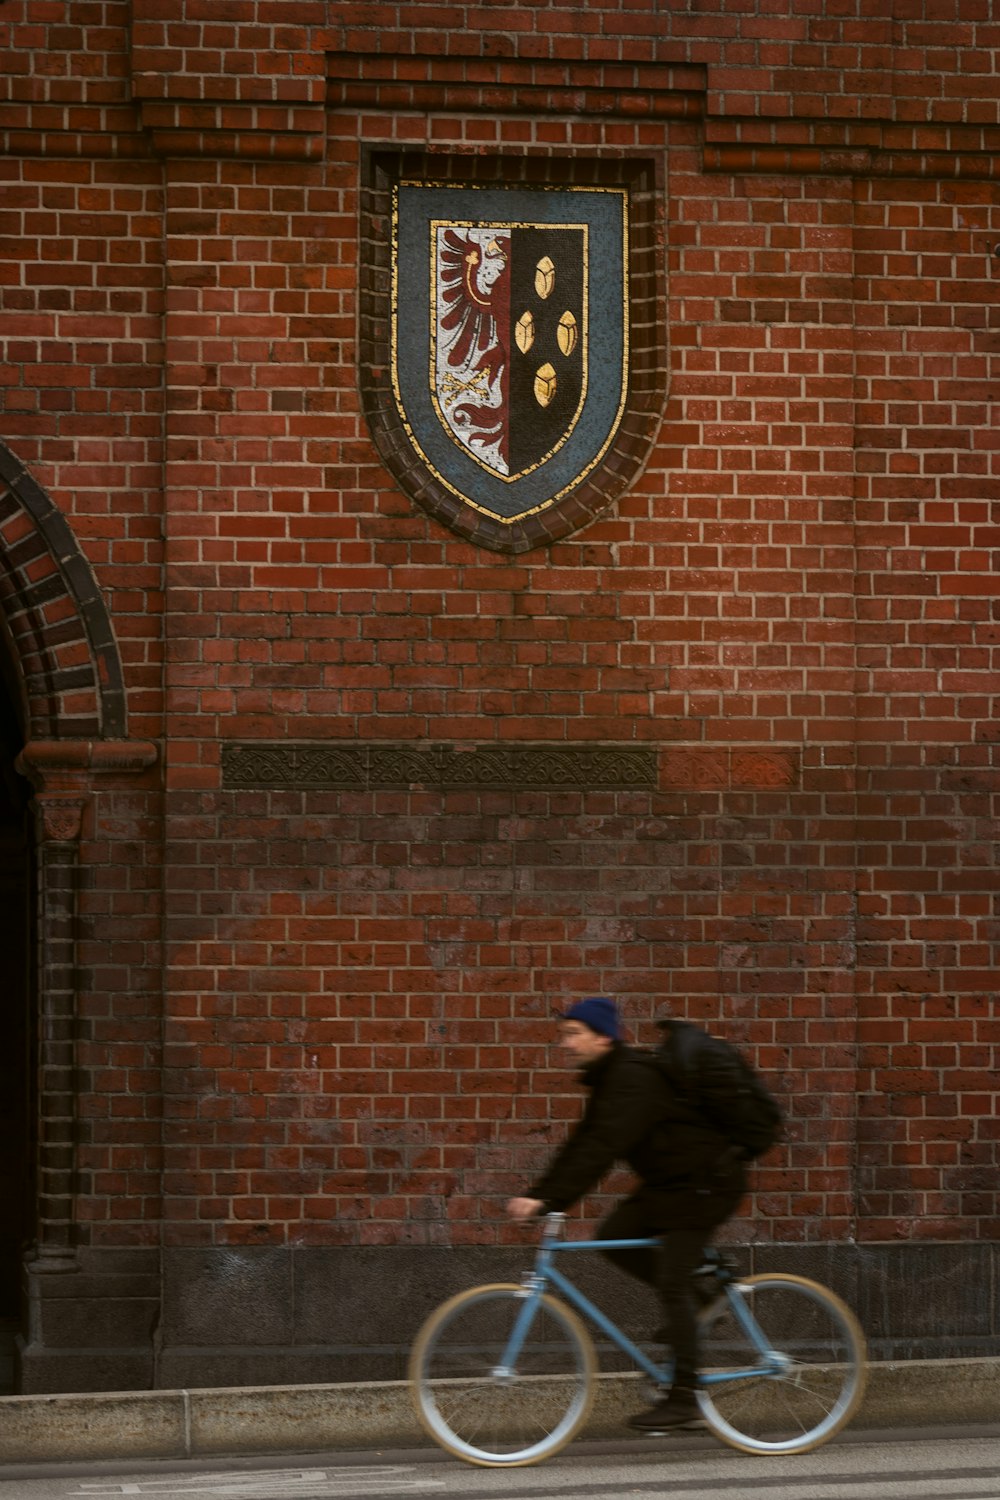 a man riding a bike down a street past a brick building